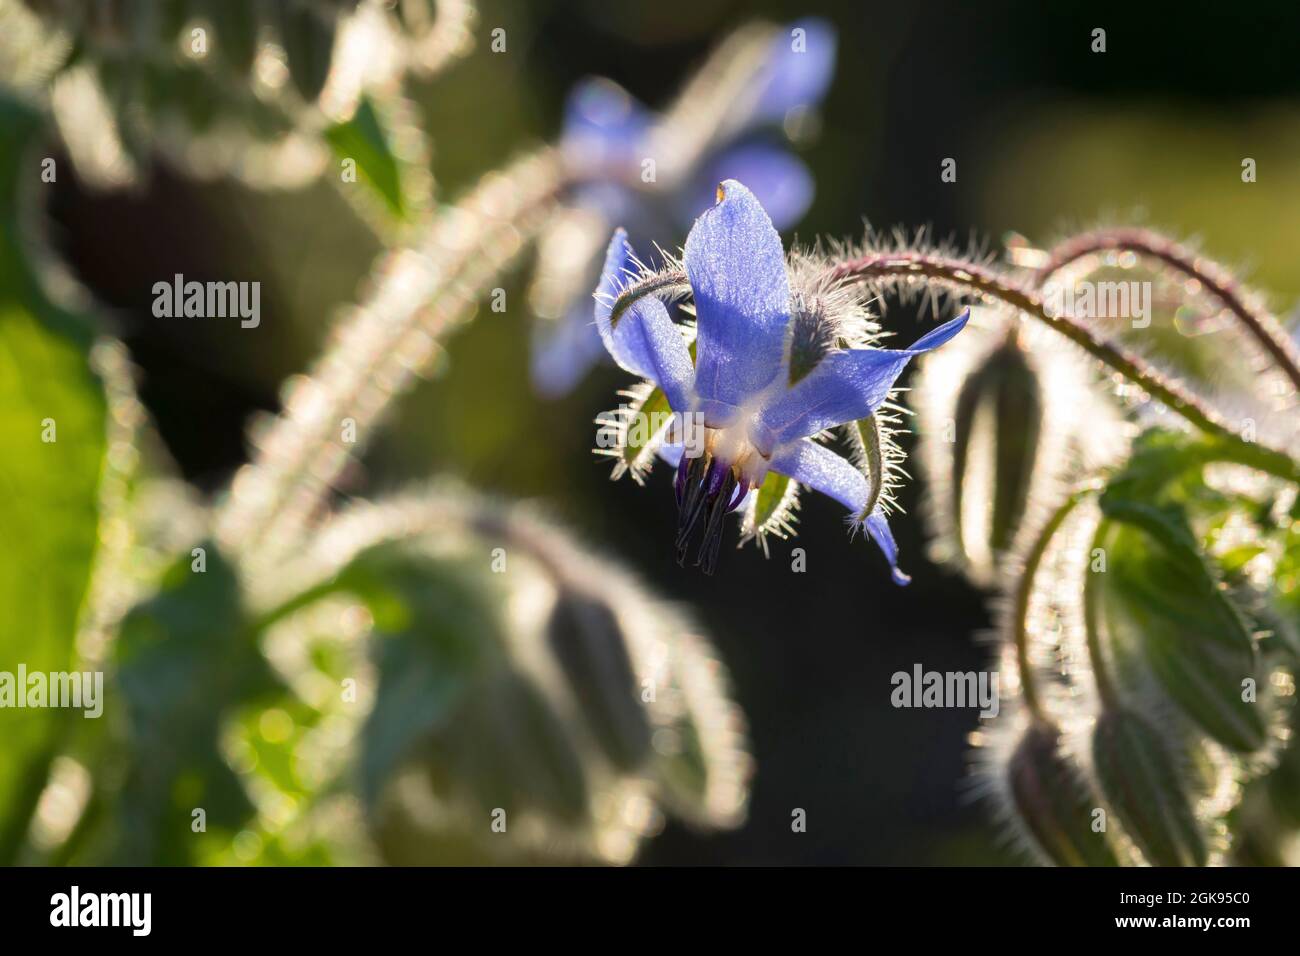 Comune borragine (Borago officinalis), fiore in controluce Foto Stock